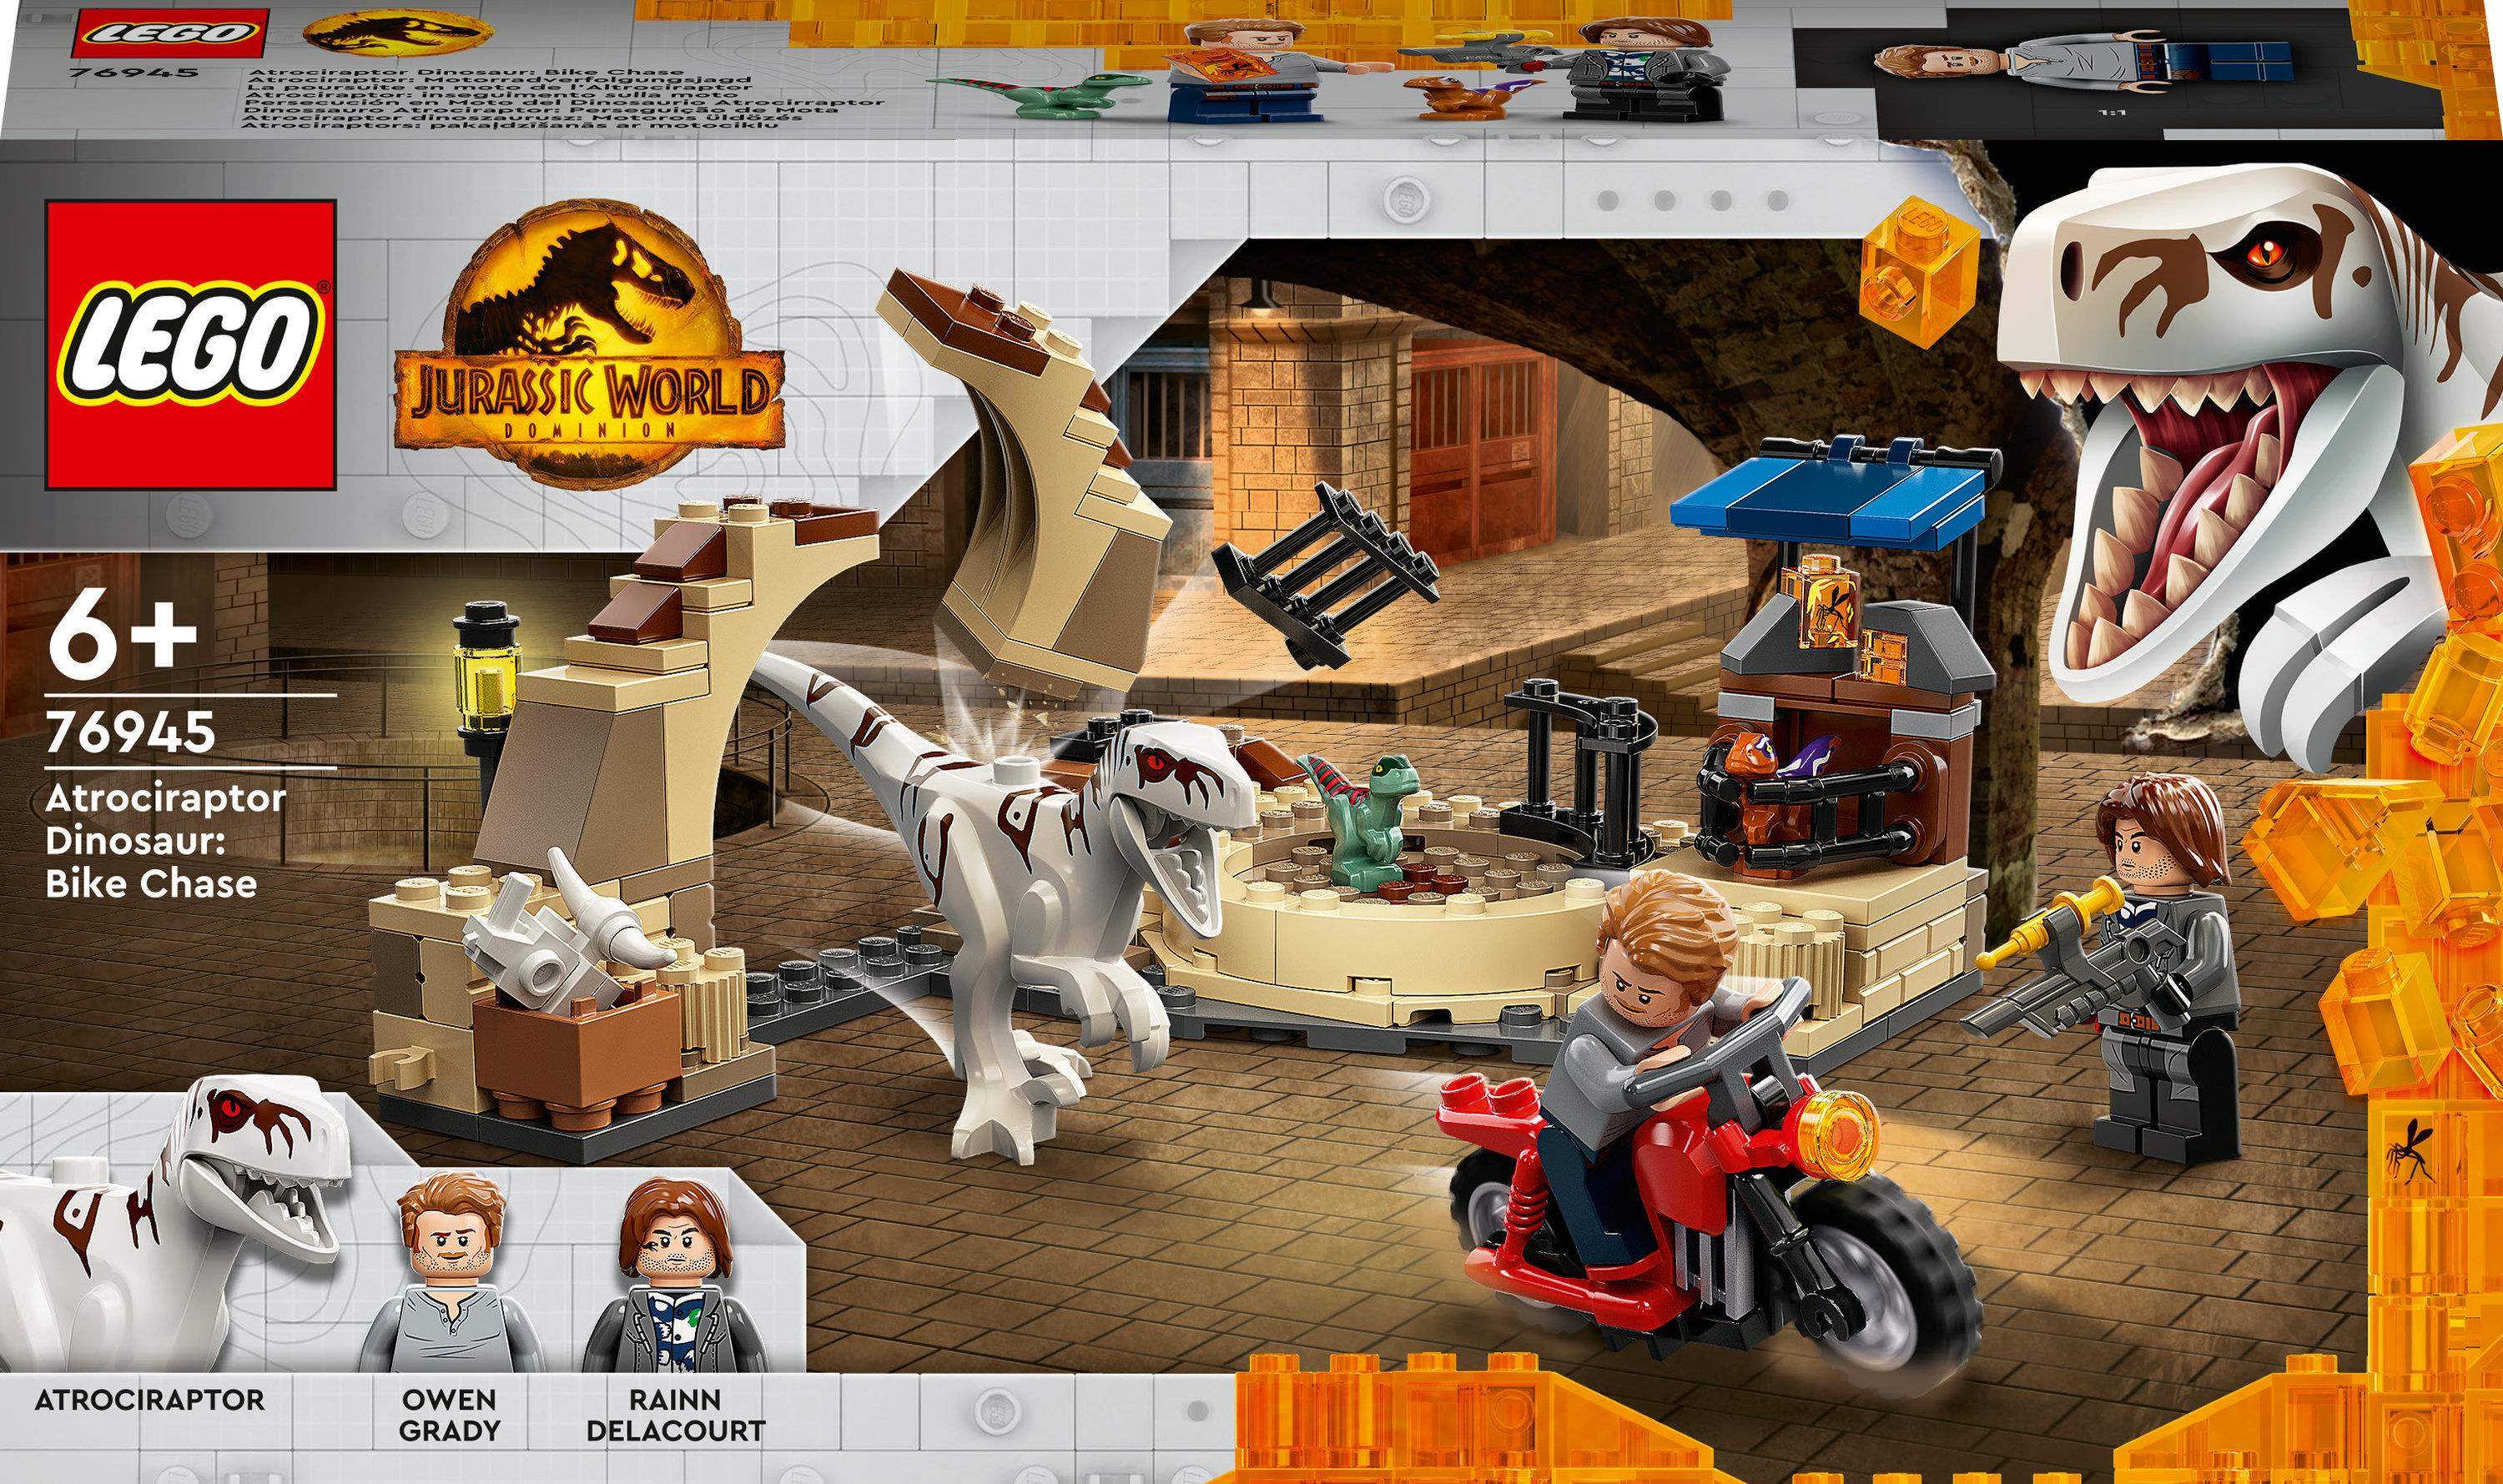 LEGO Jurassic World Atrociraptor: